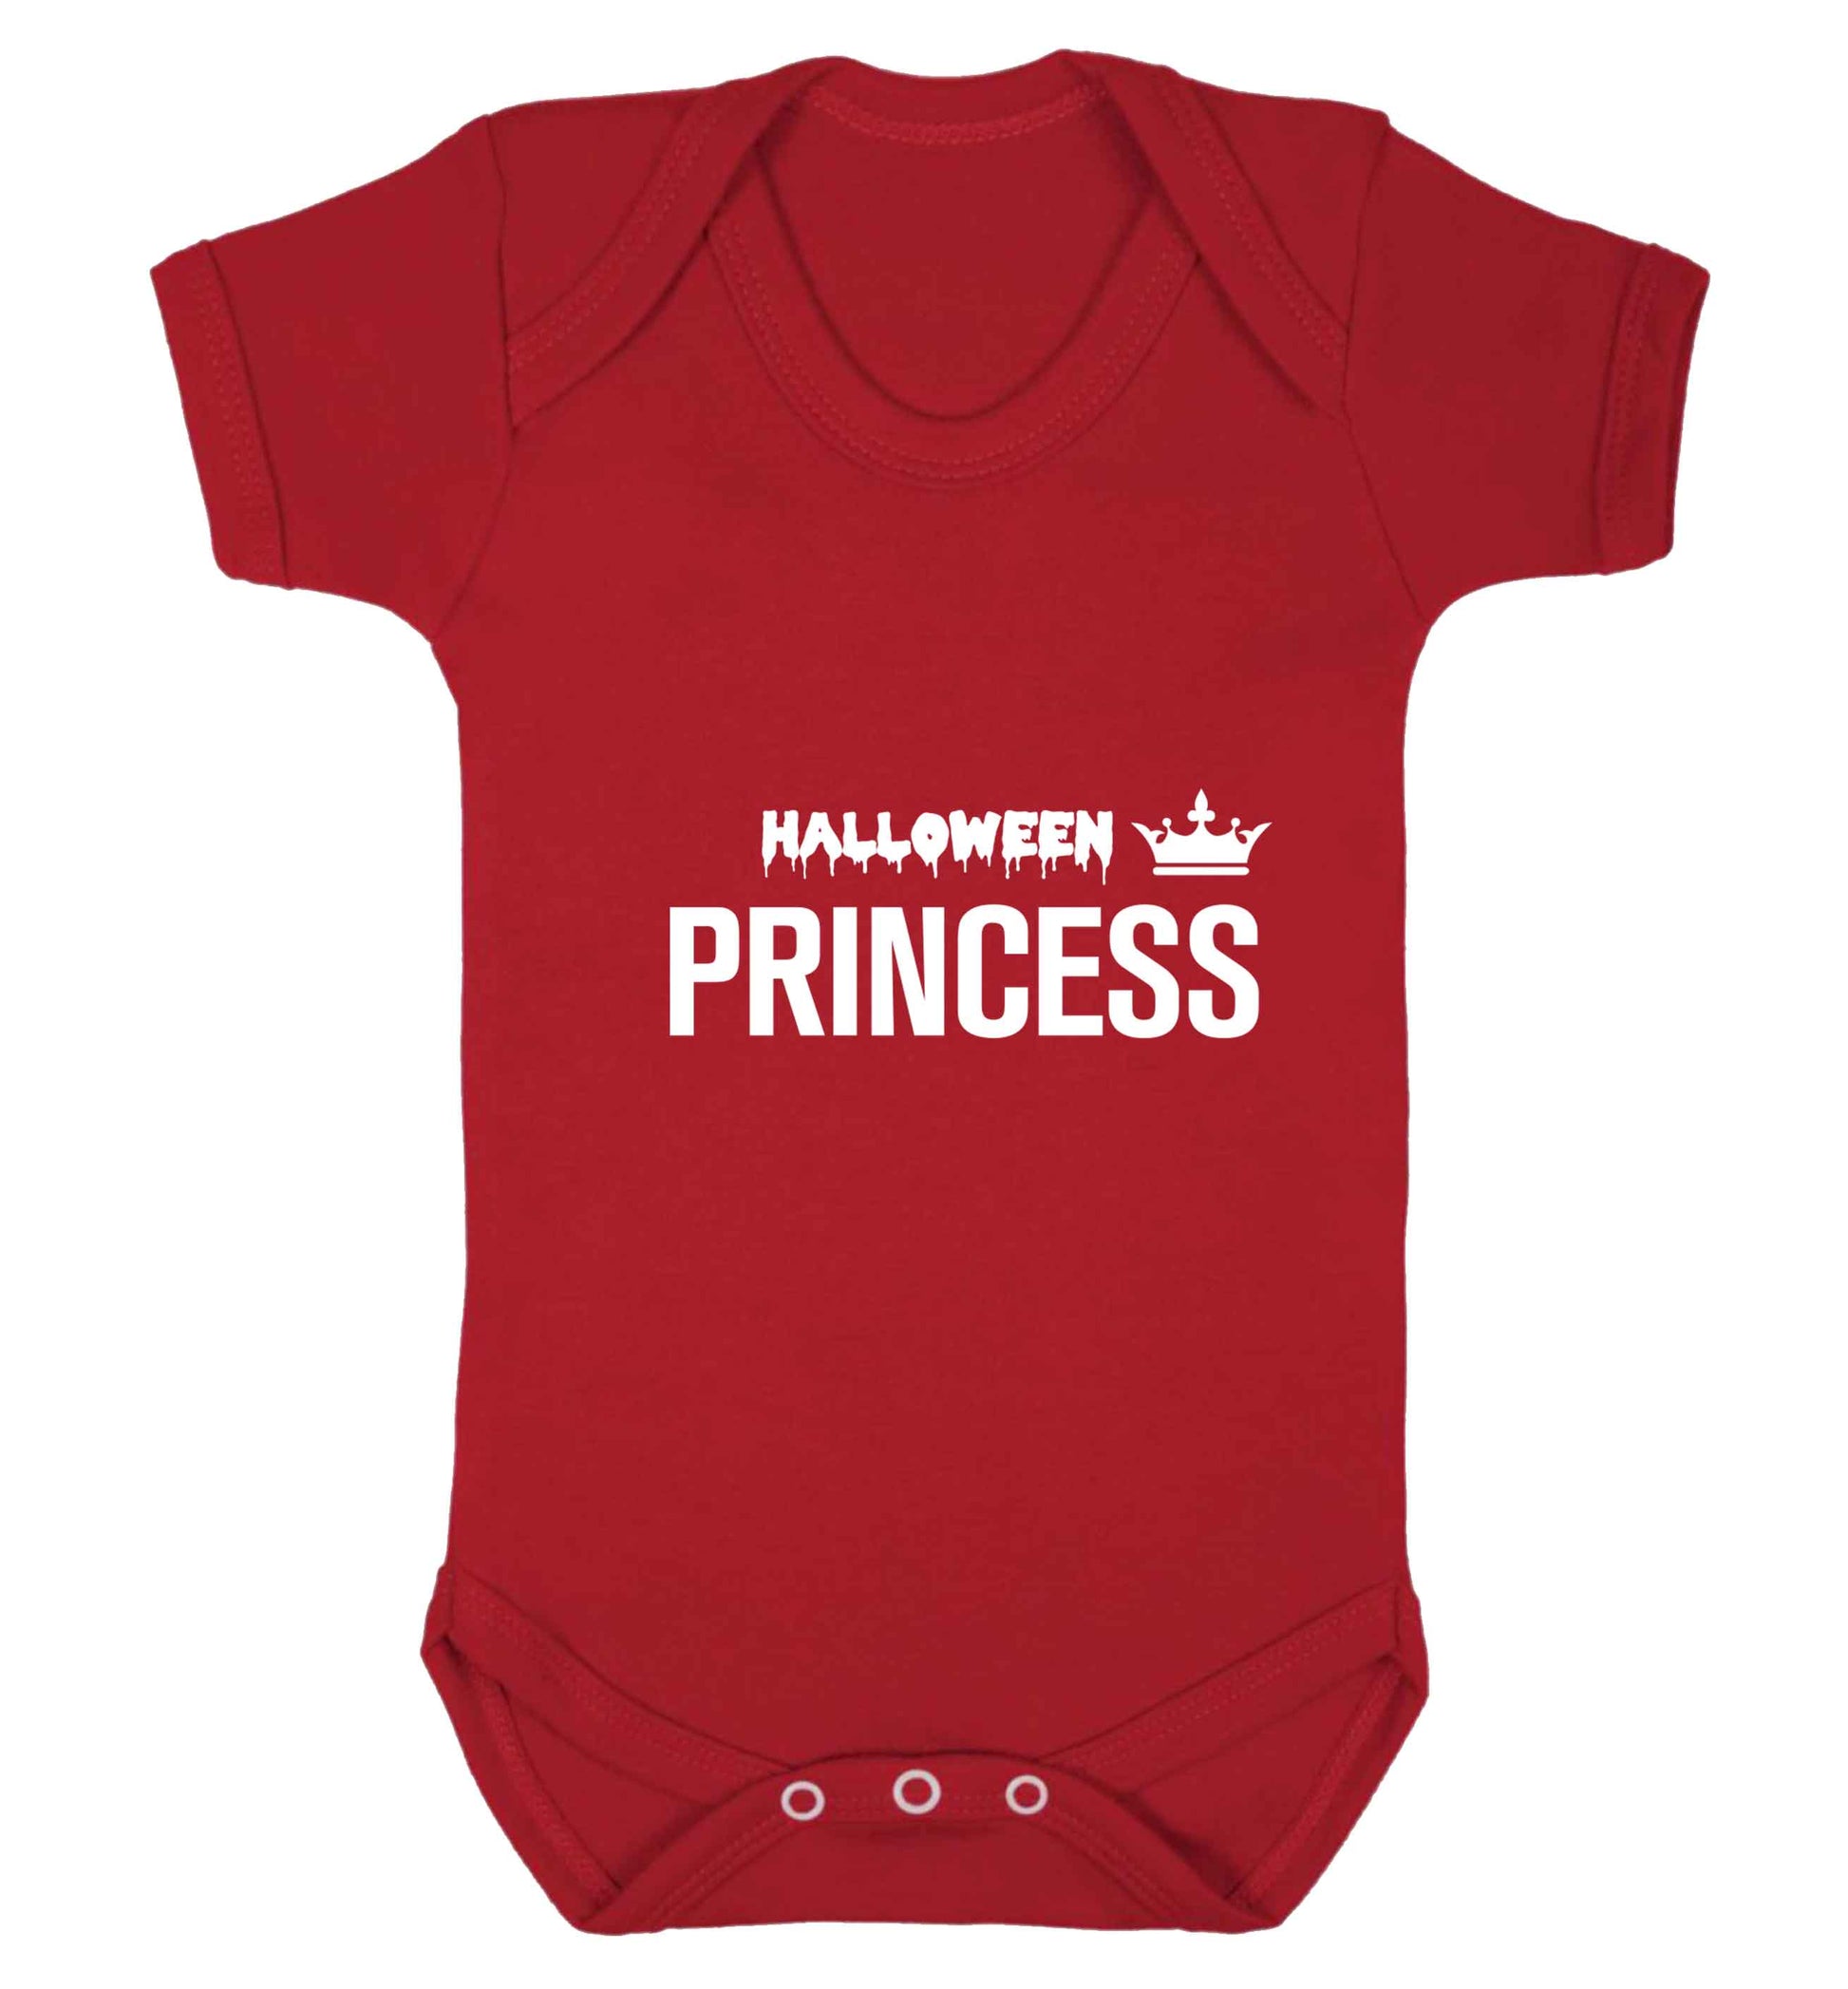 Halloween princess baby vest red 18-24 months